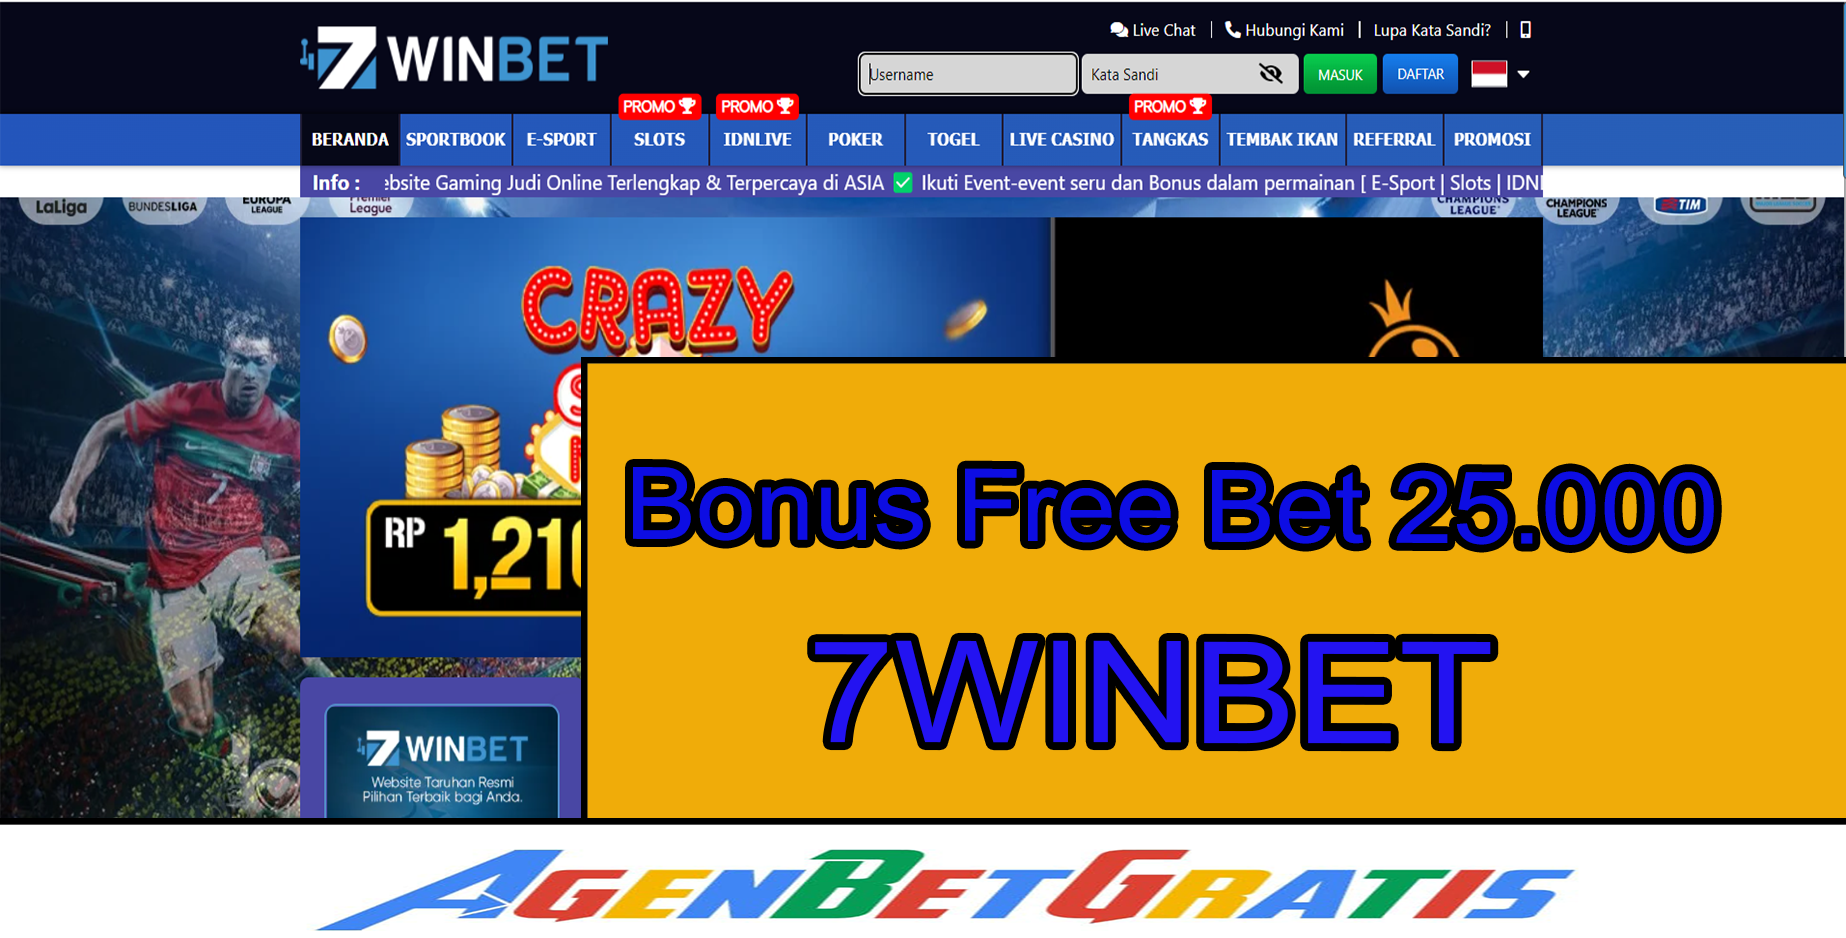 7WINBET - Bonus FreeBet 25.000